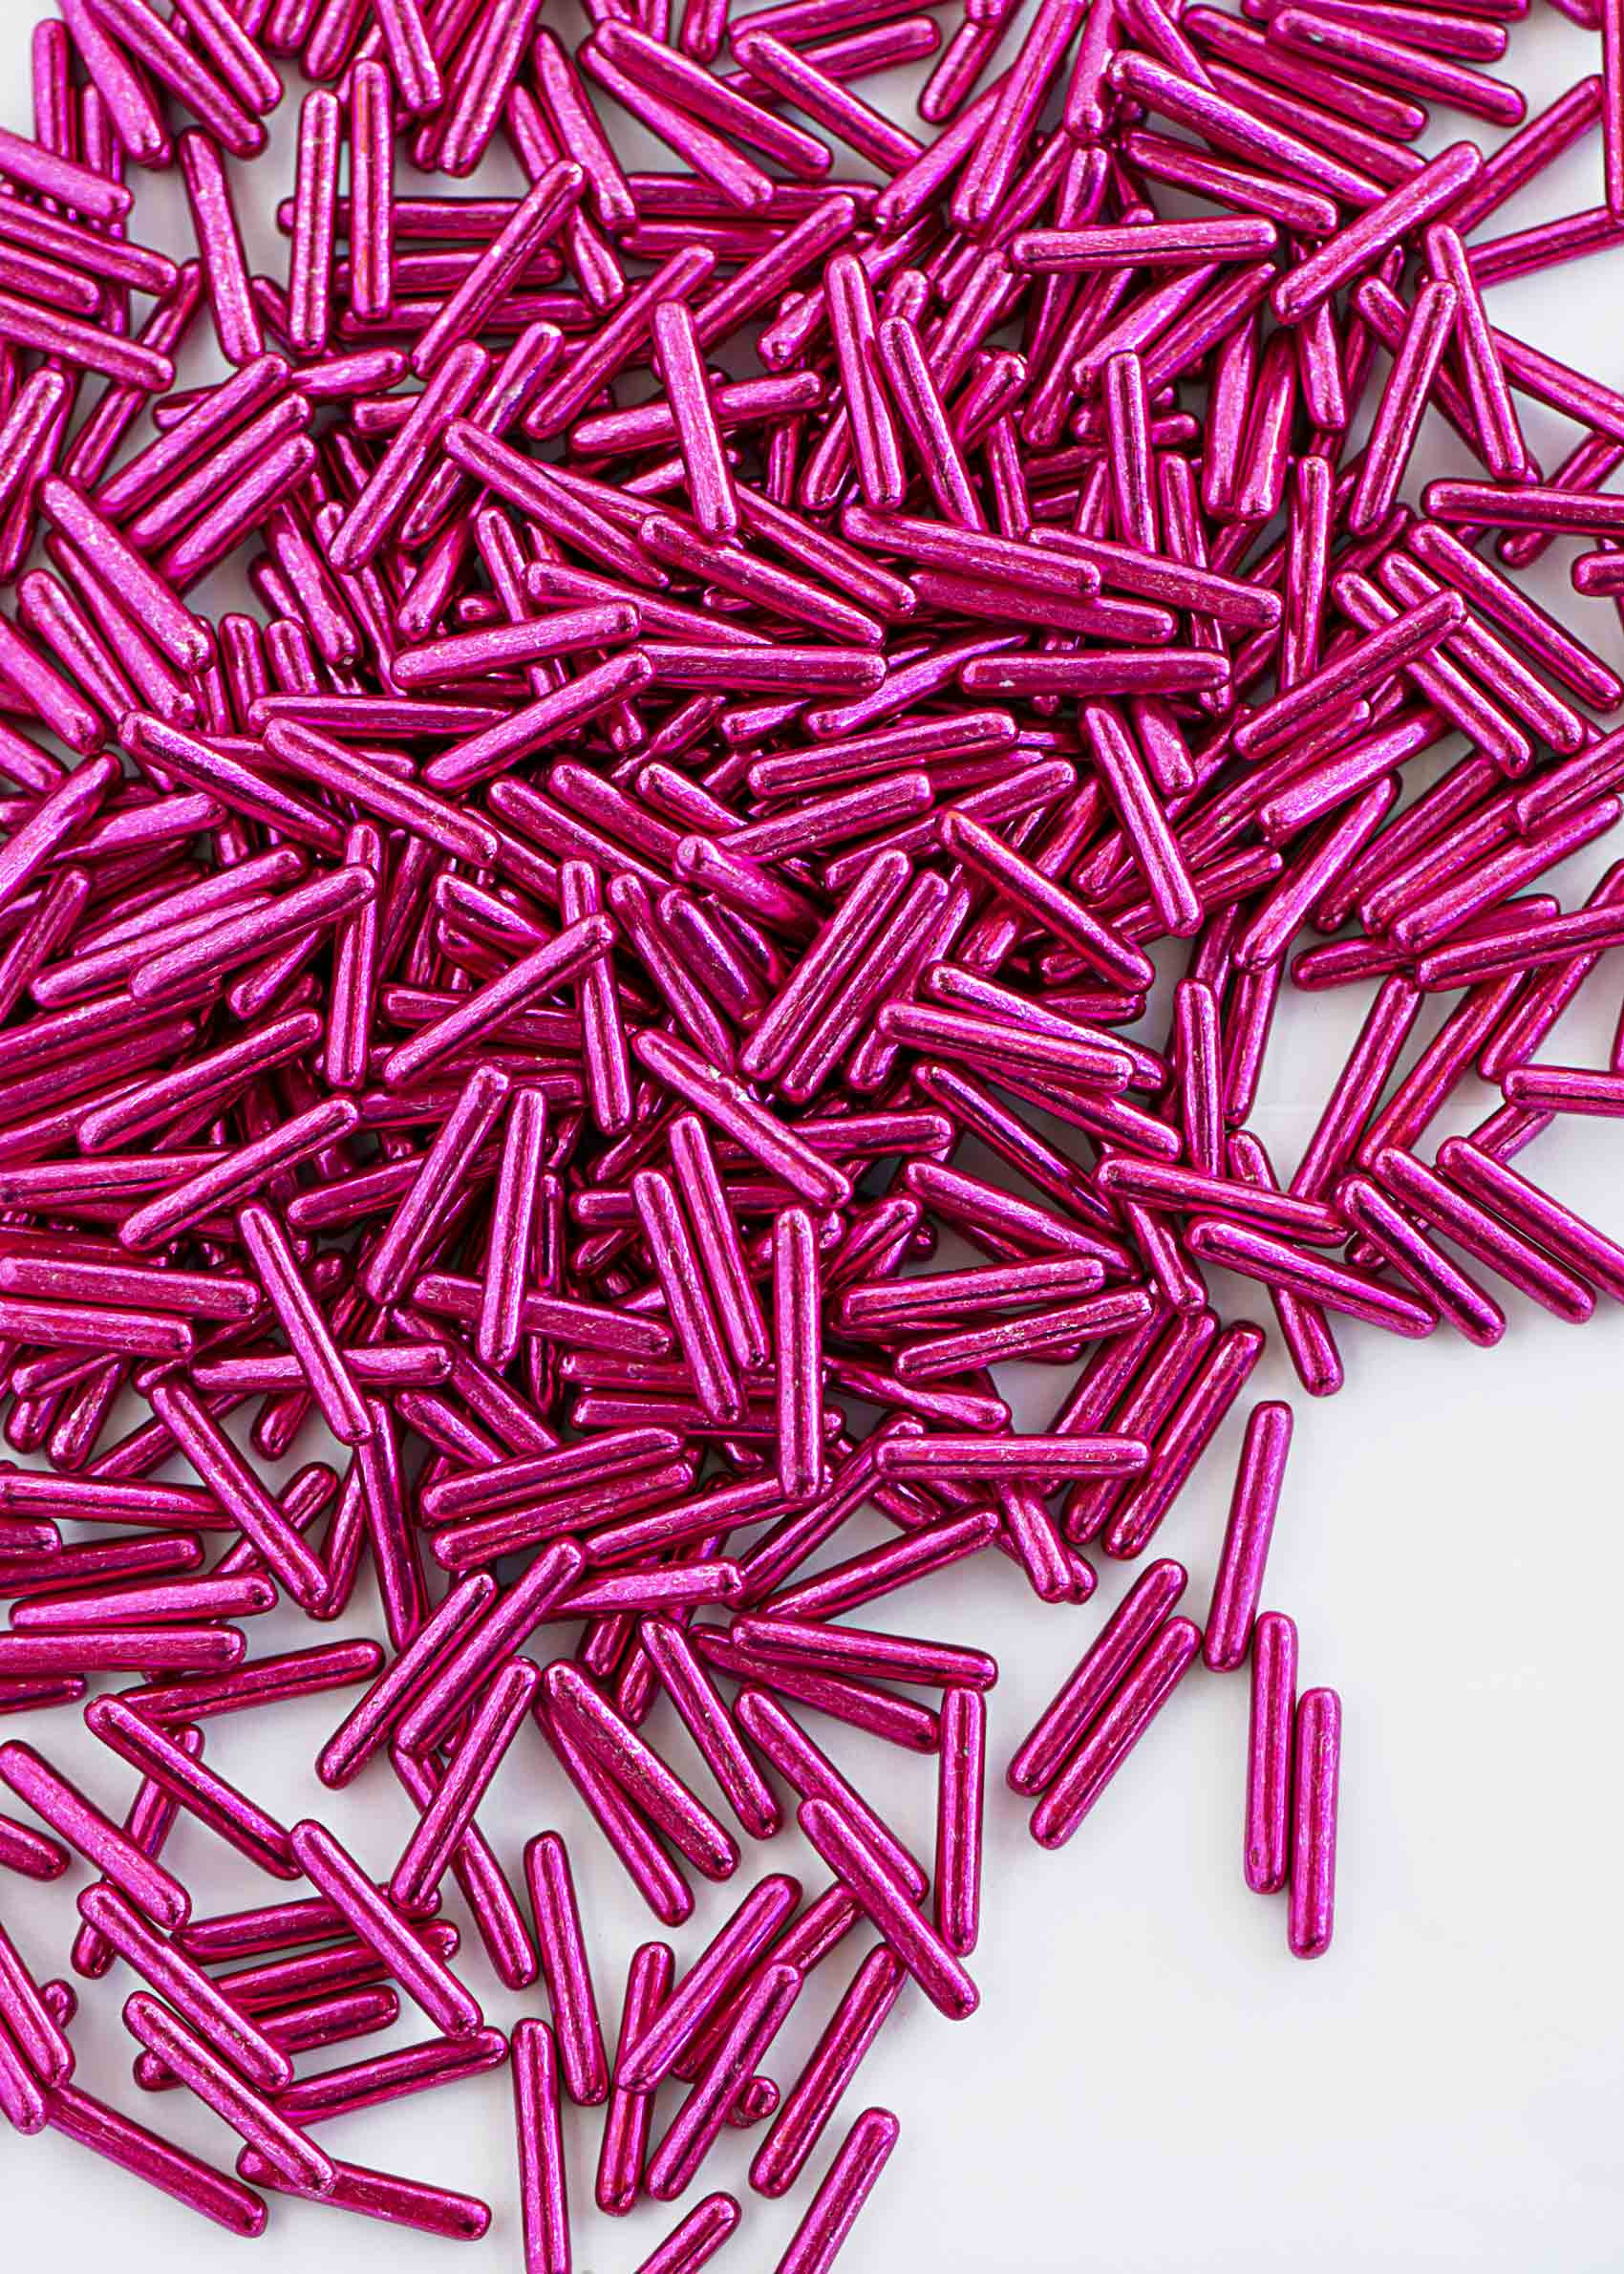 Bright Pink Metallic Rods